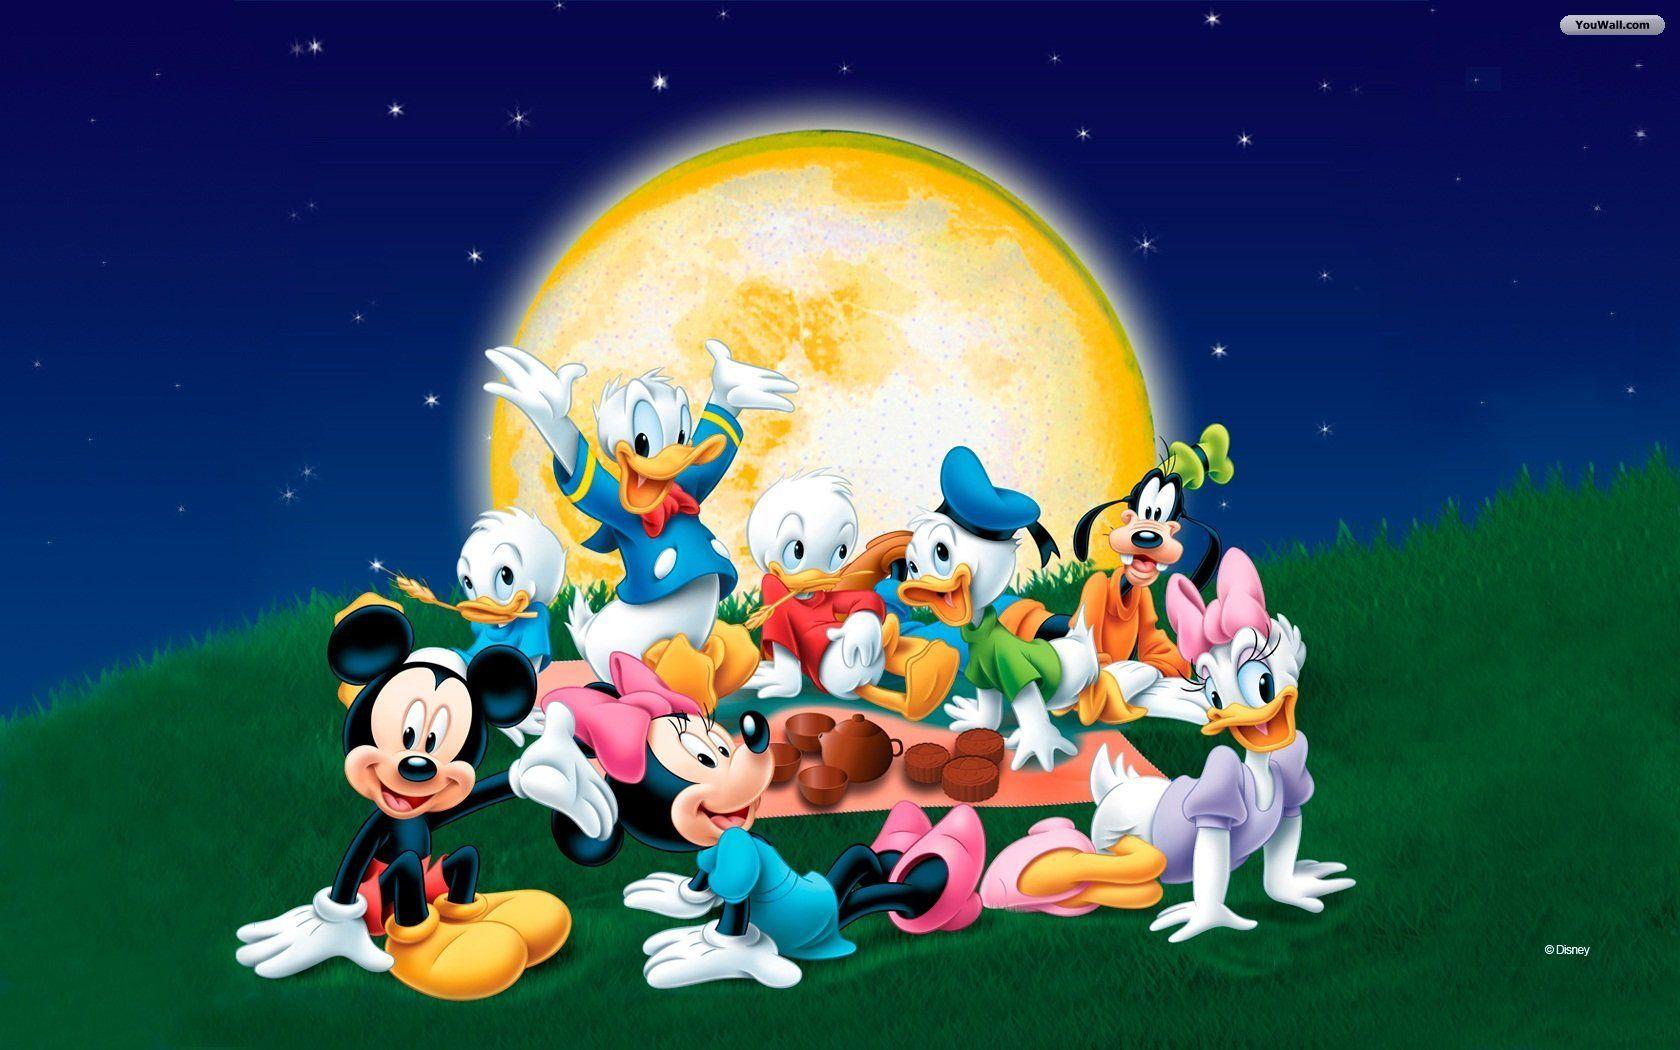 Amazing Disney Cartoons Image & Wallpaper Norbert Nason